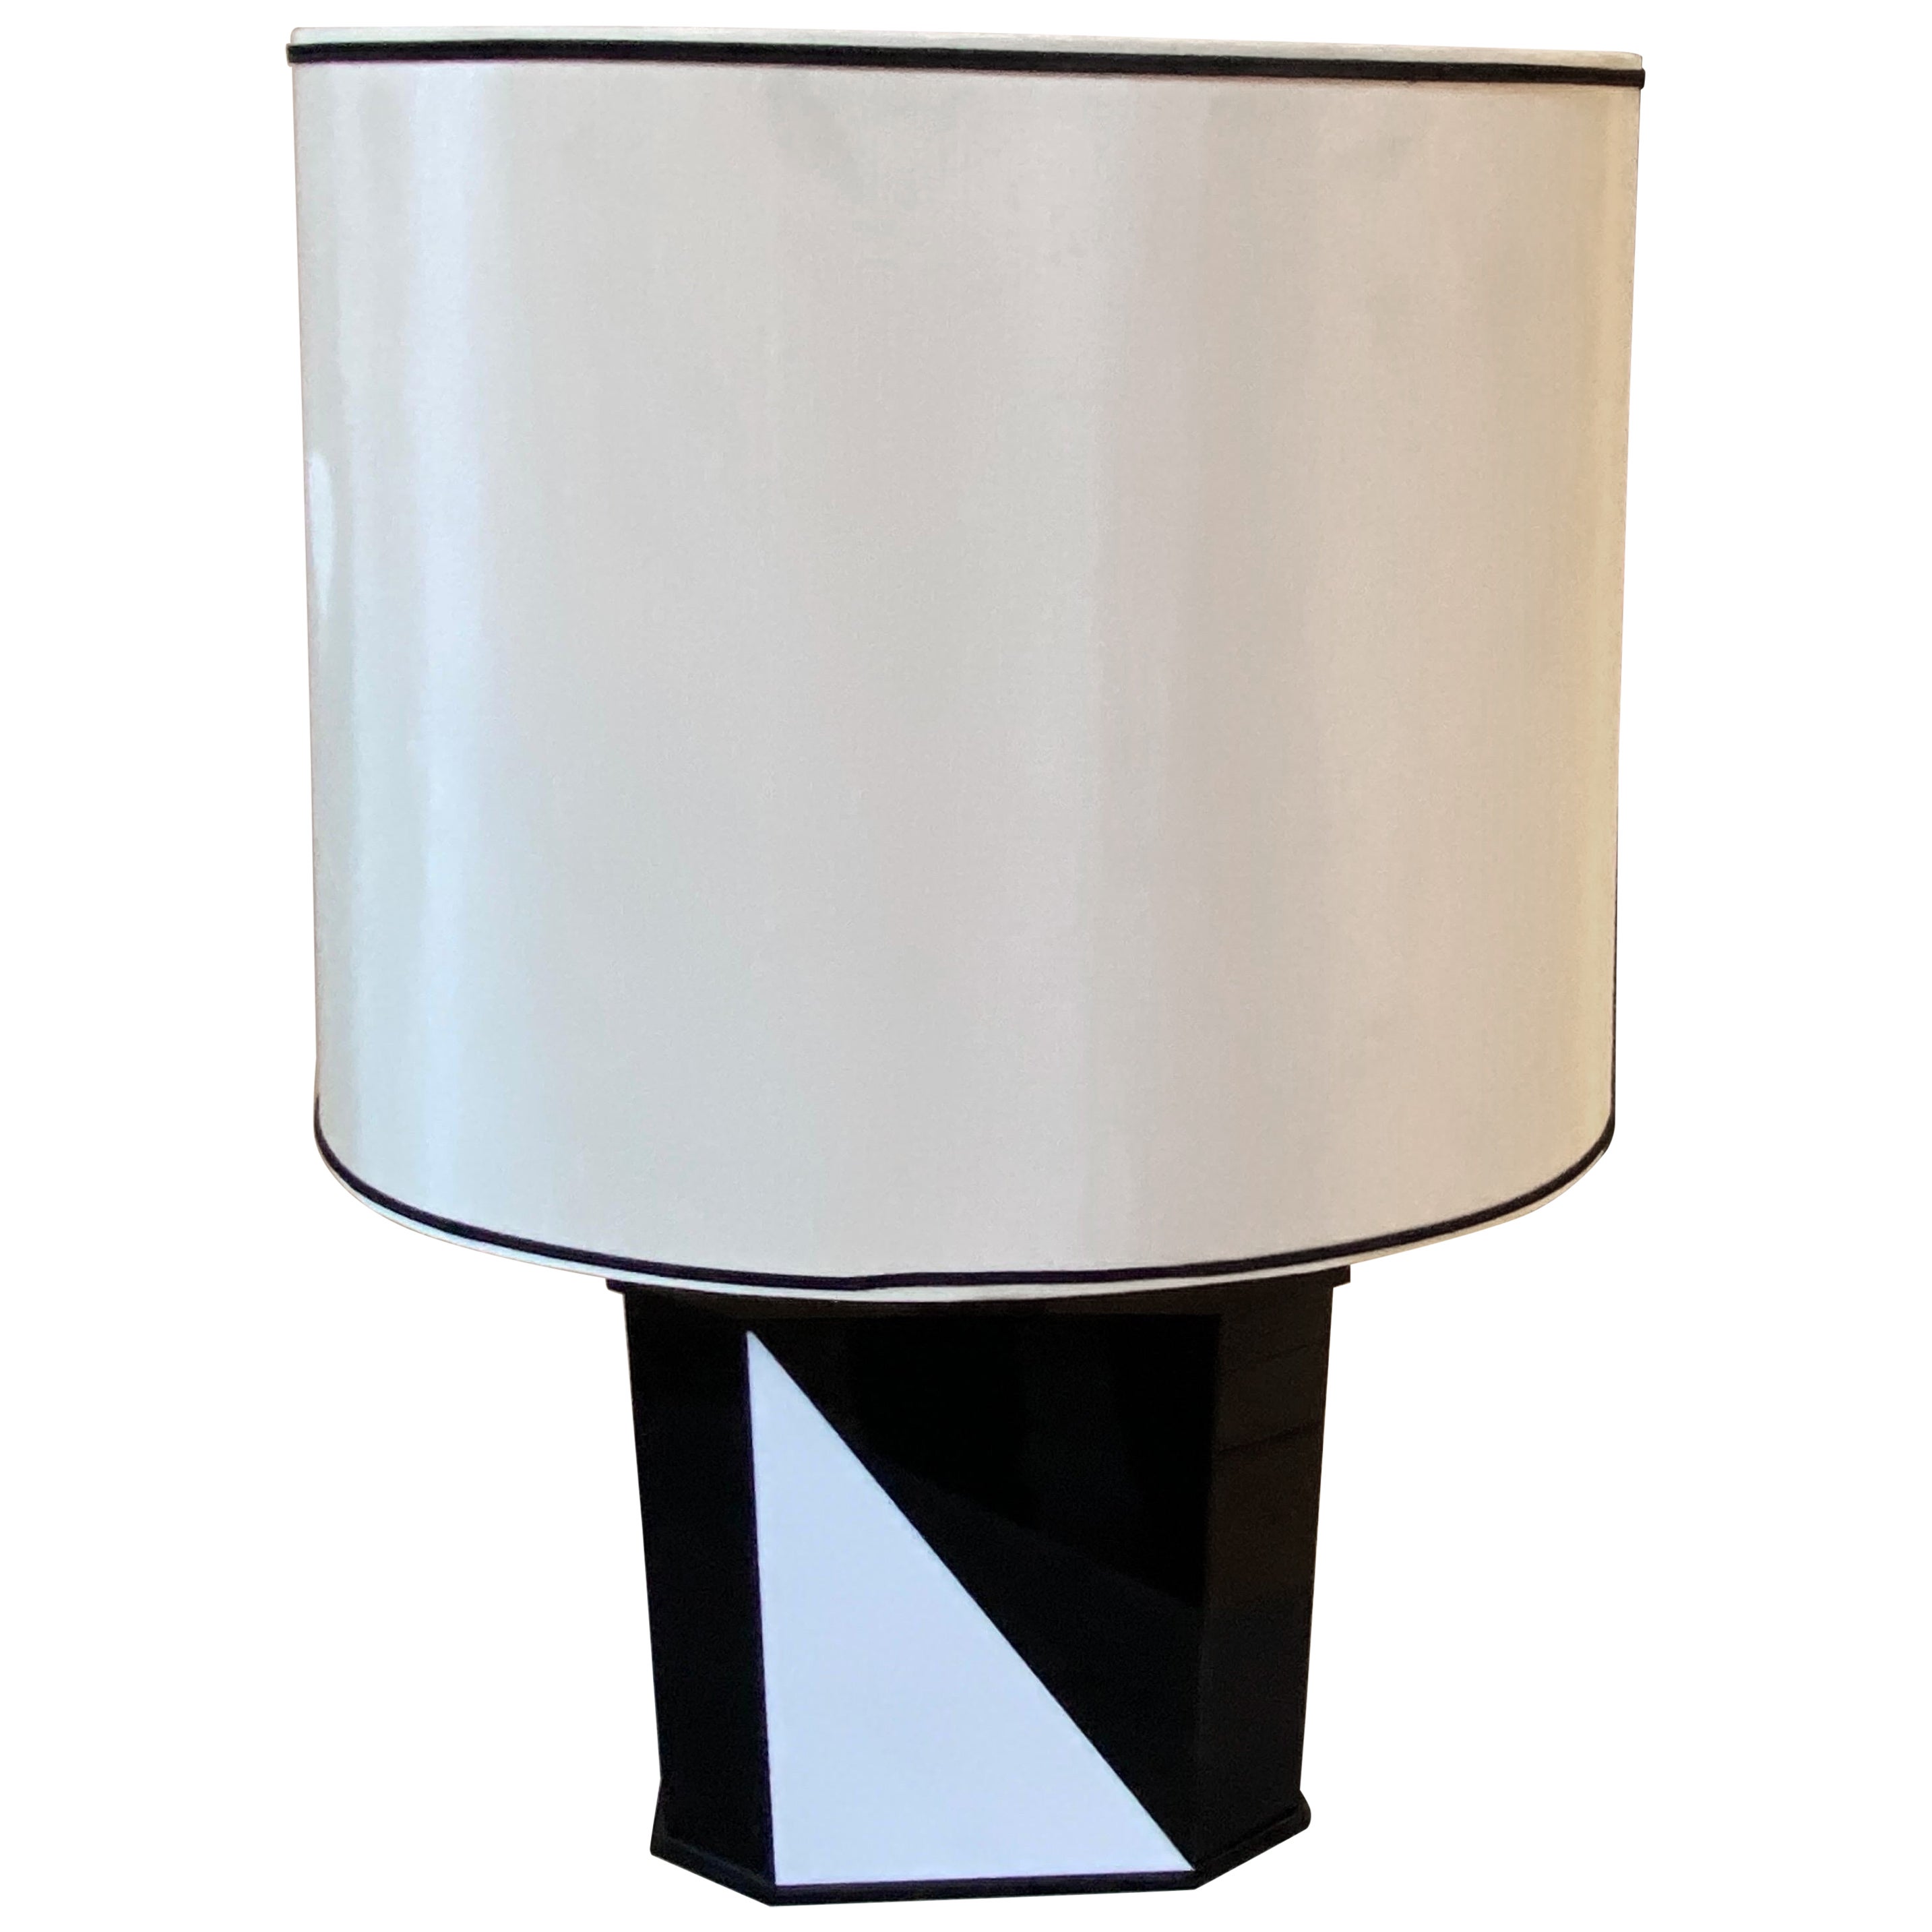 1970s Modernist Black and White Plexiglass Italian Table Lamp For Sale